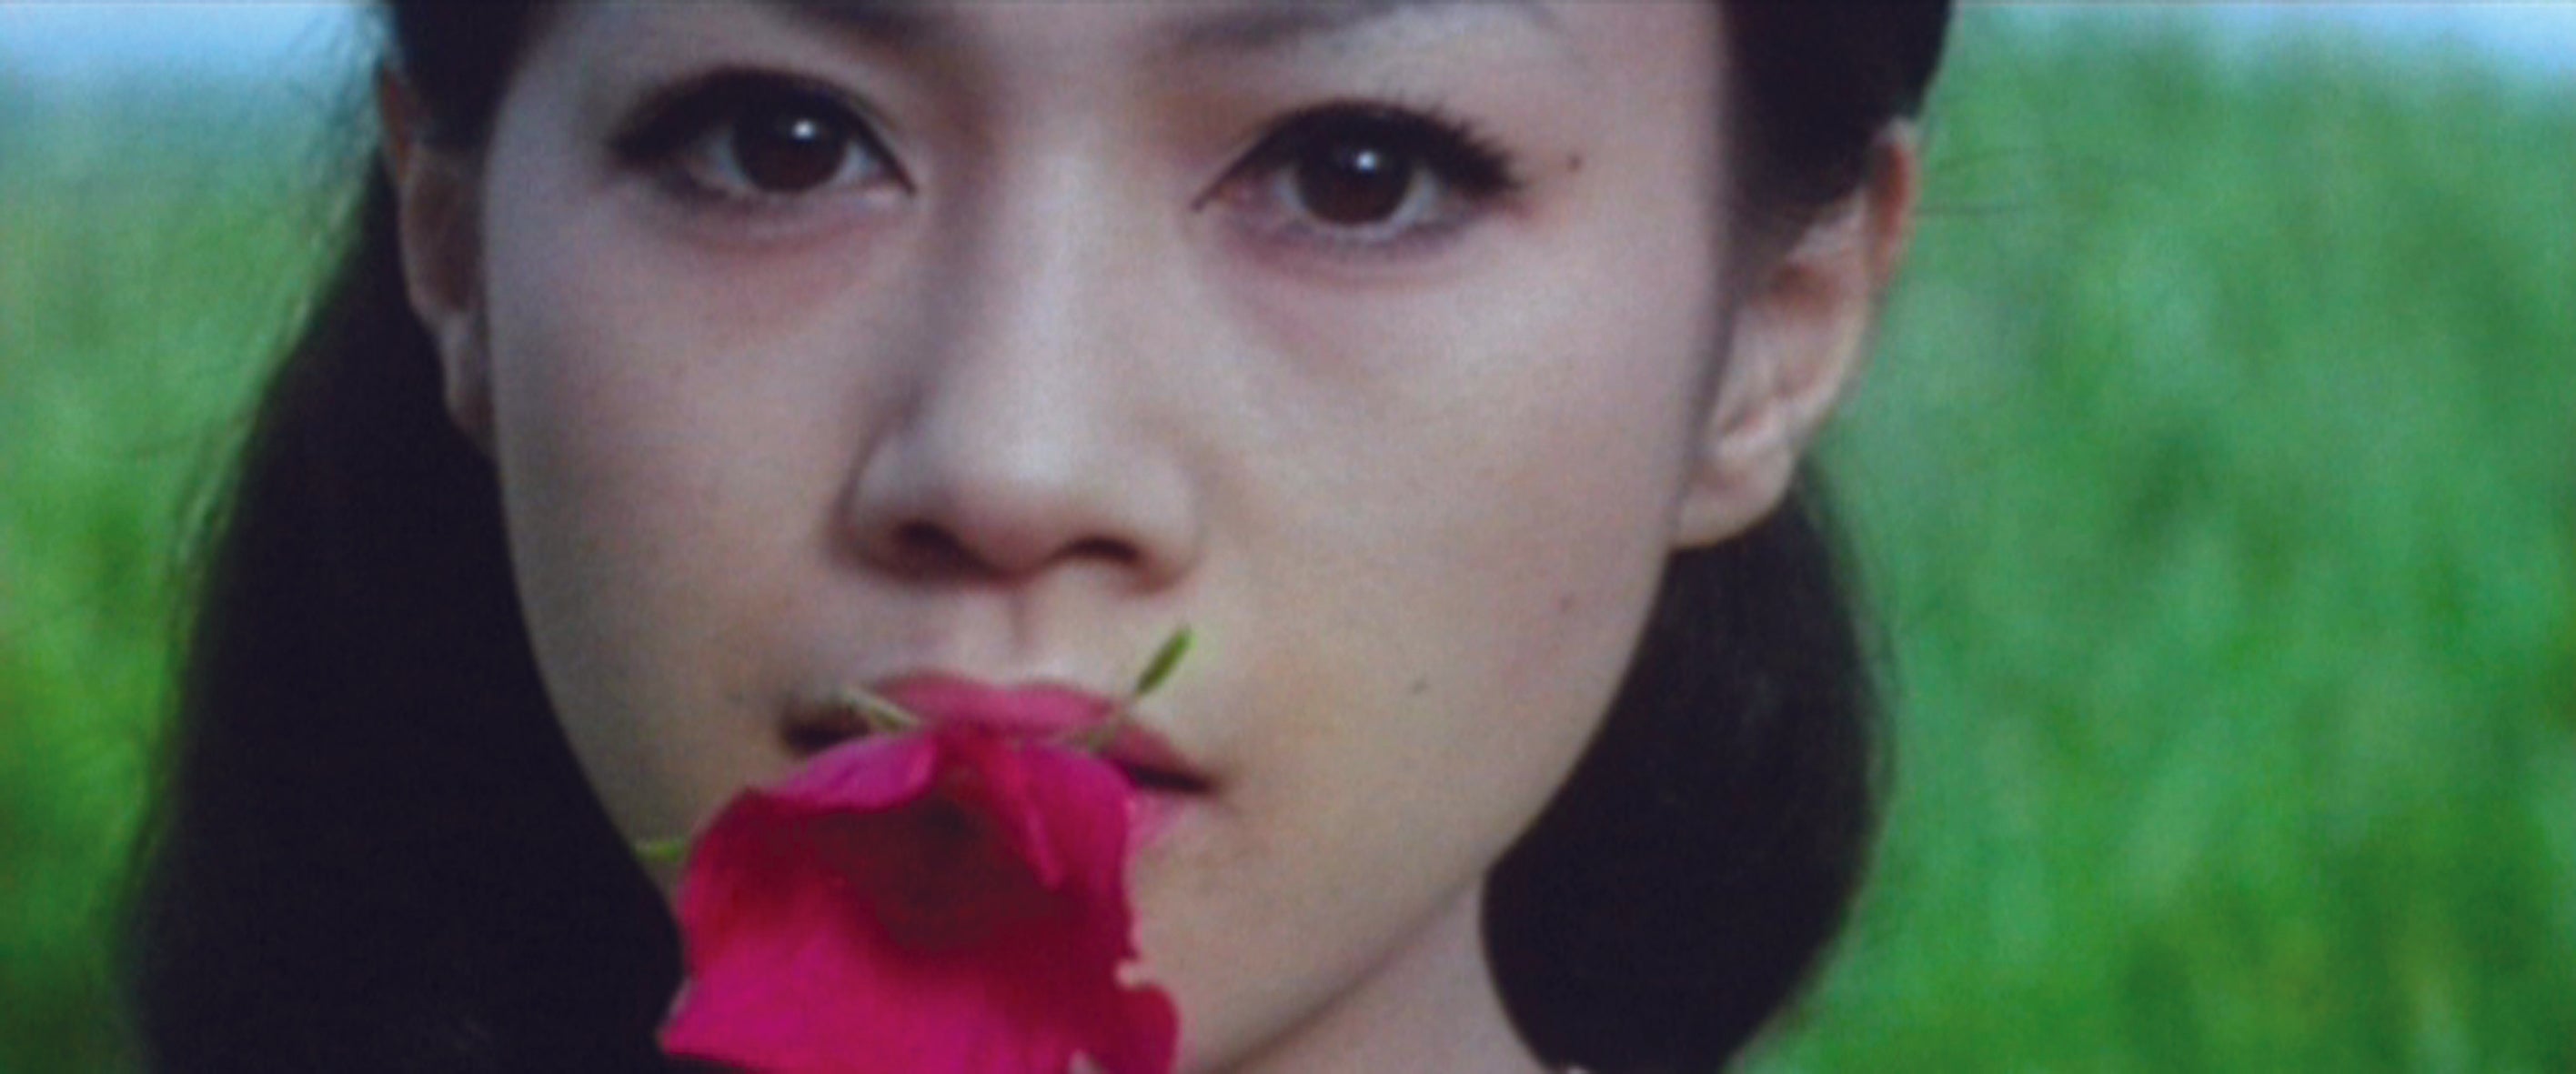 Les Plaisirs de la Chair de Nagisa Oshima - DVD - Carlotta Films - La Boutique